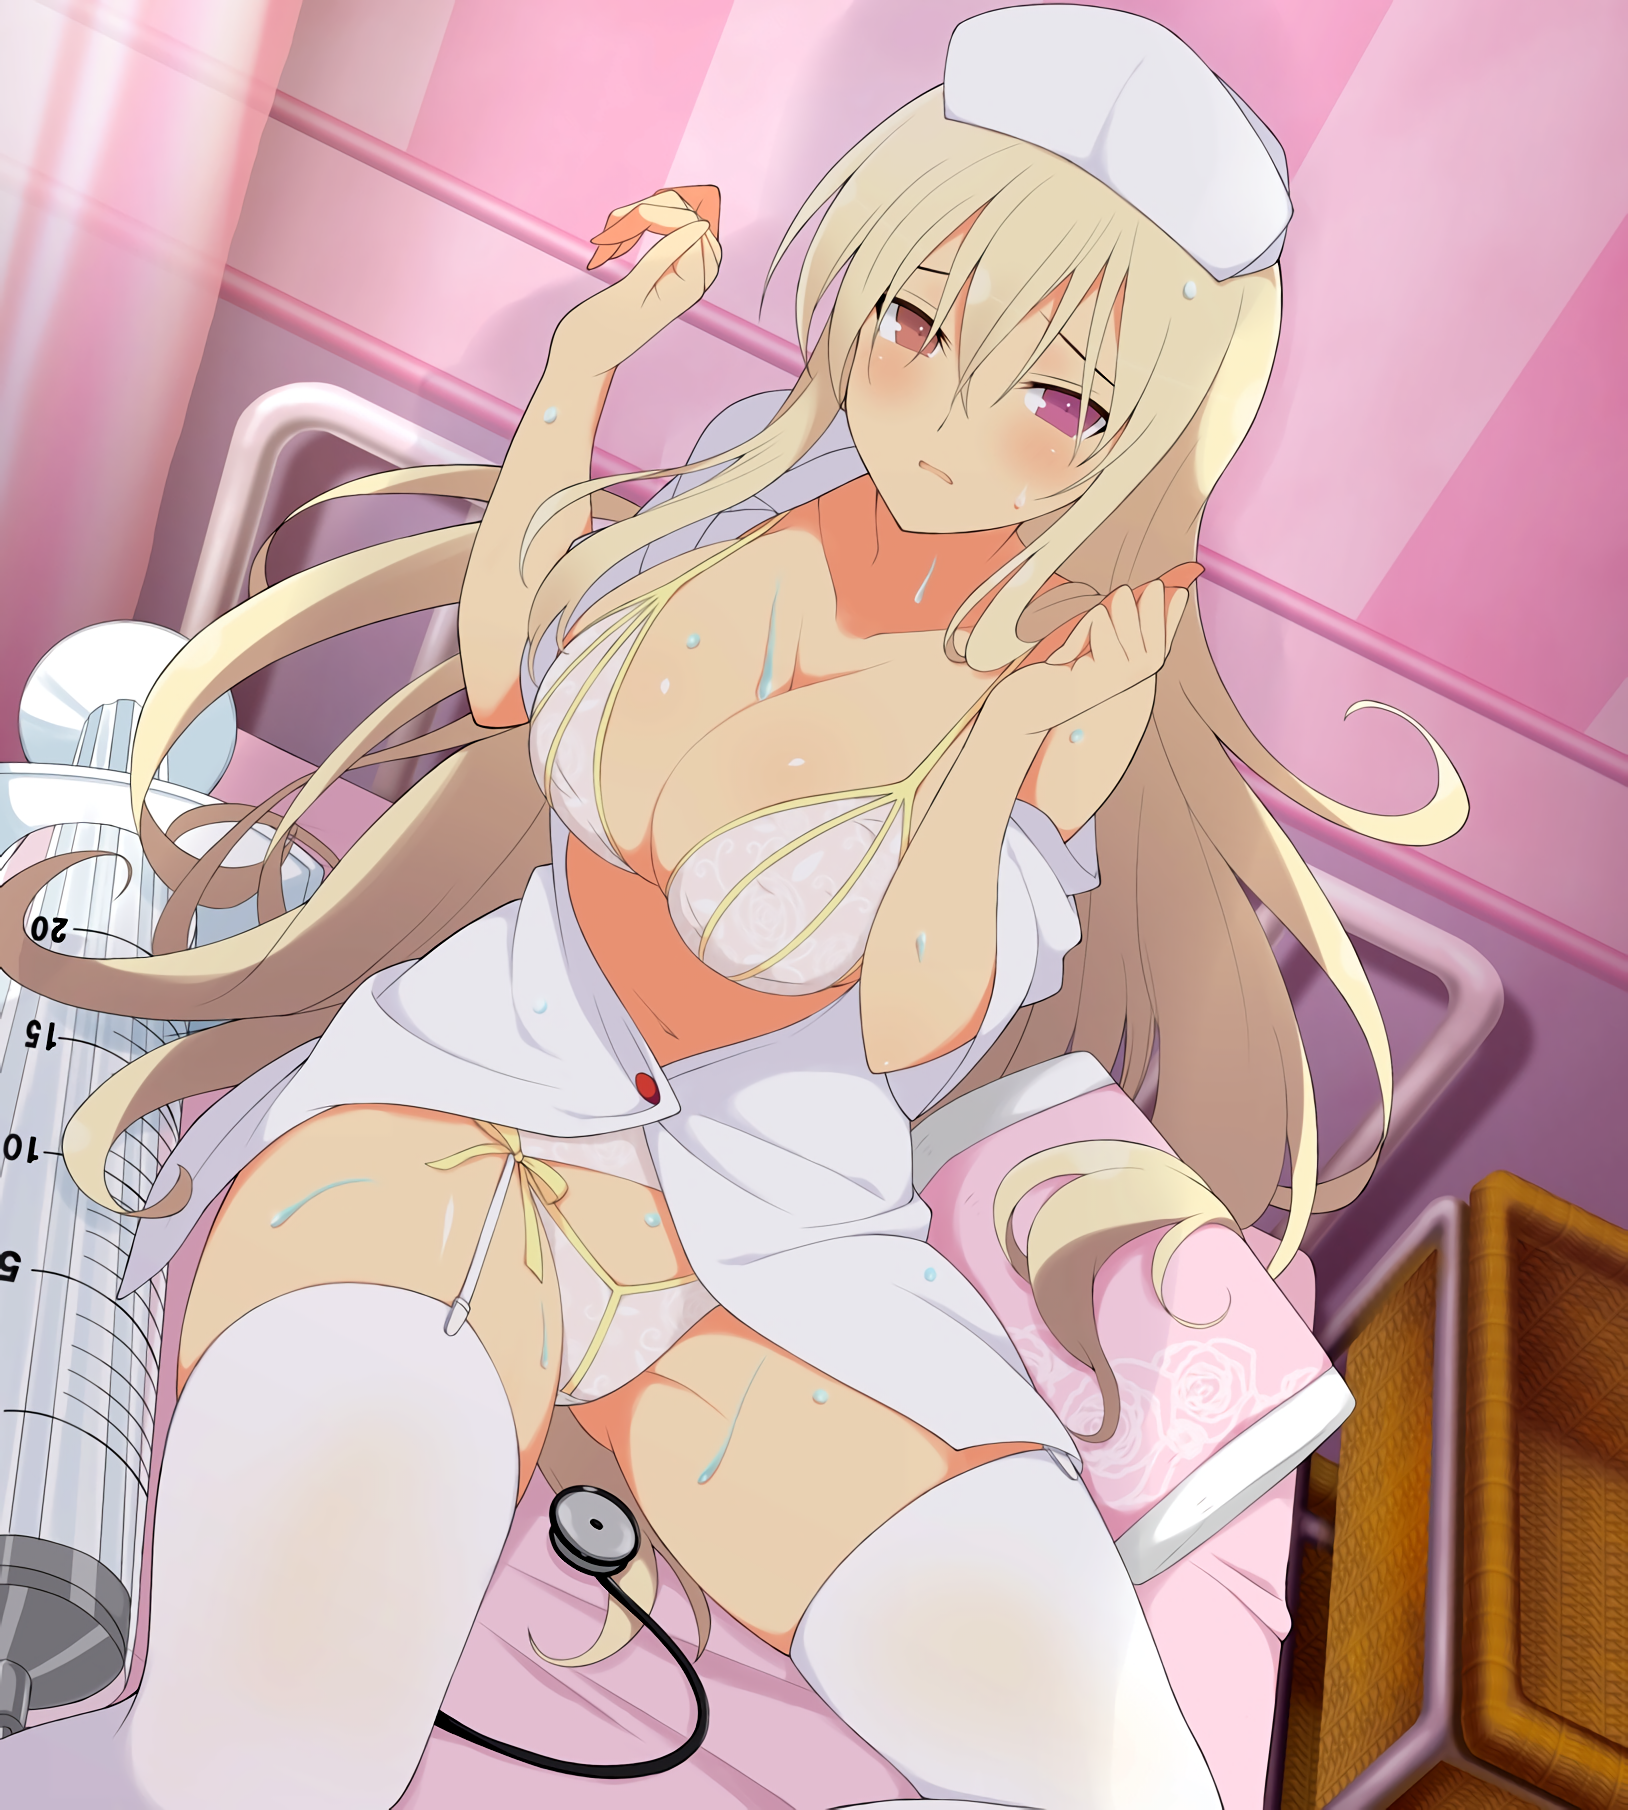 Anime 1628x1810 Senran Kagura Leo (Senran Kagura) blonde big boobs cleavage nurse outfit thigh-highs open shirt underwear heterochromia anime girls Yaegashi Nan